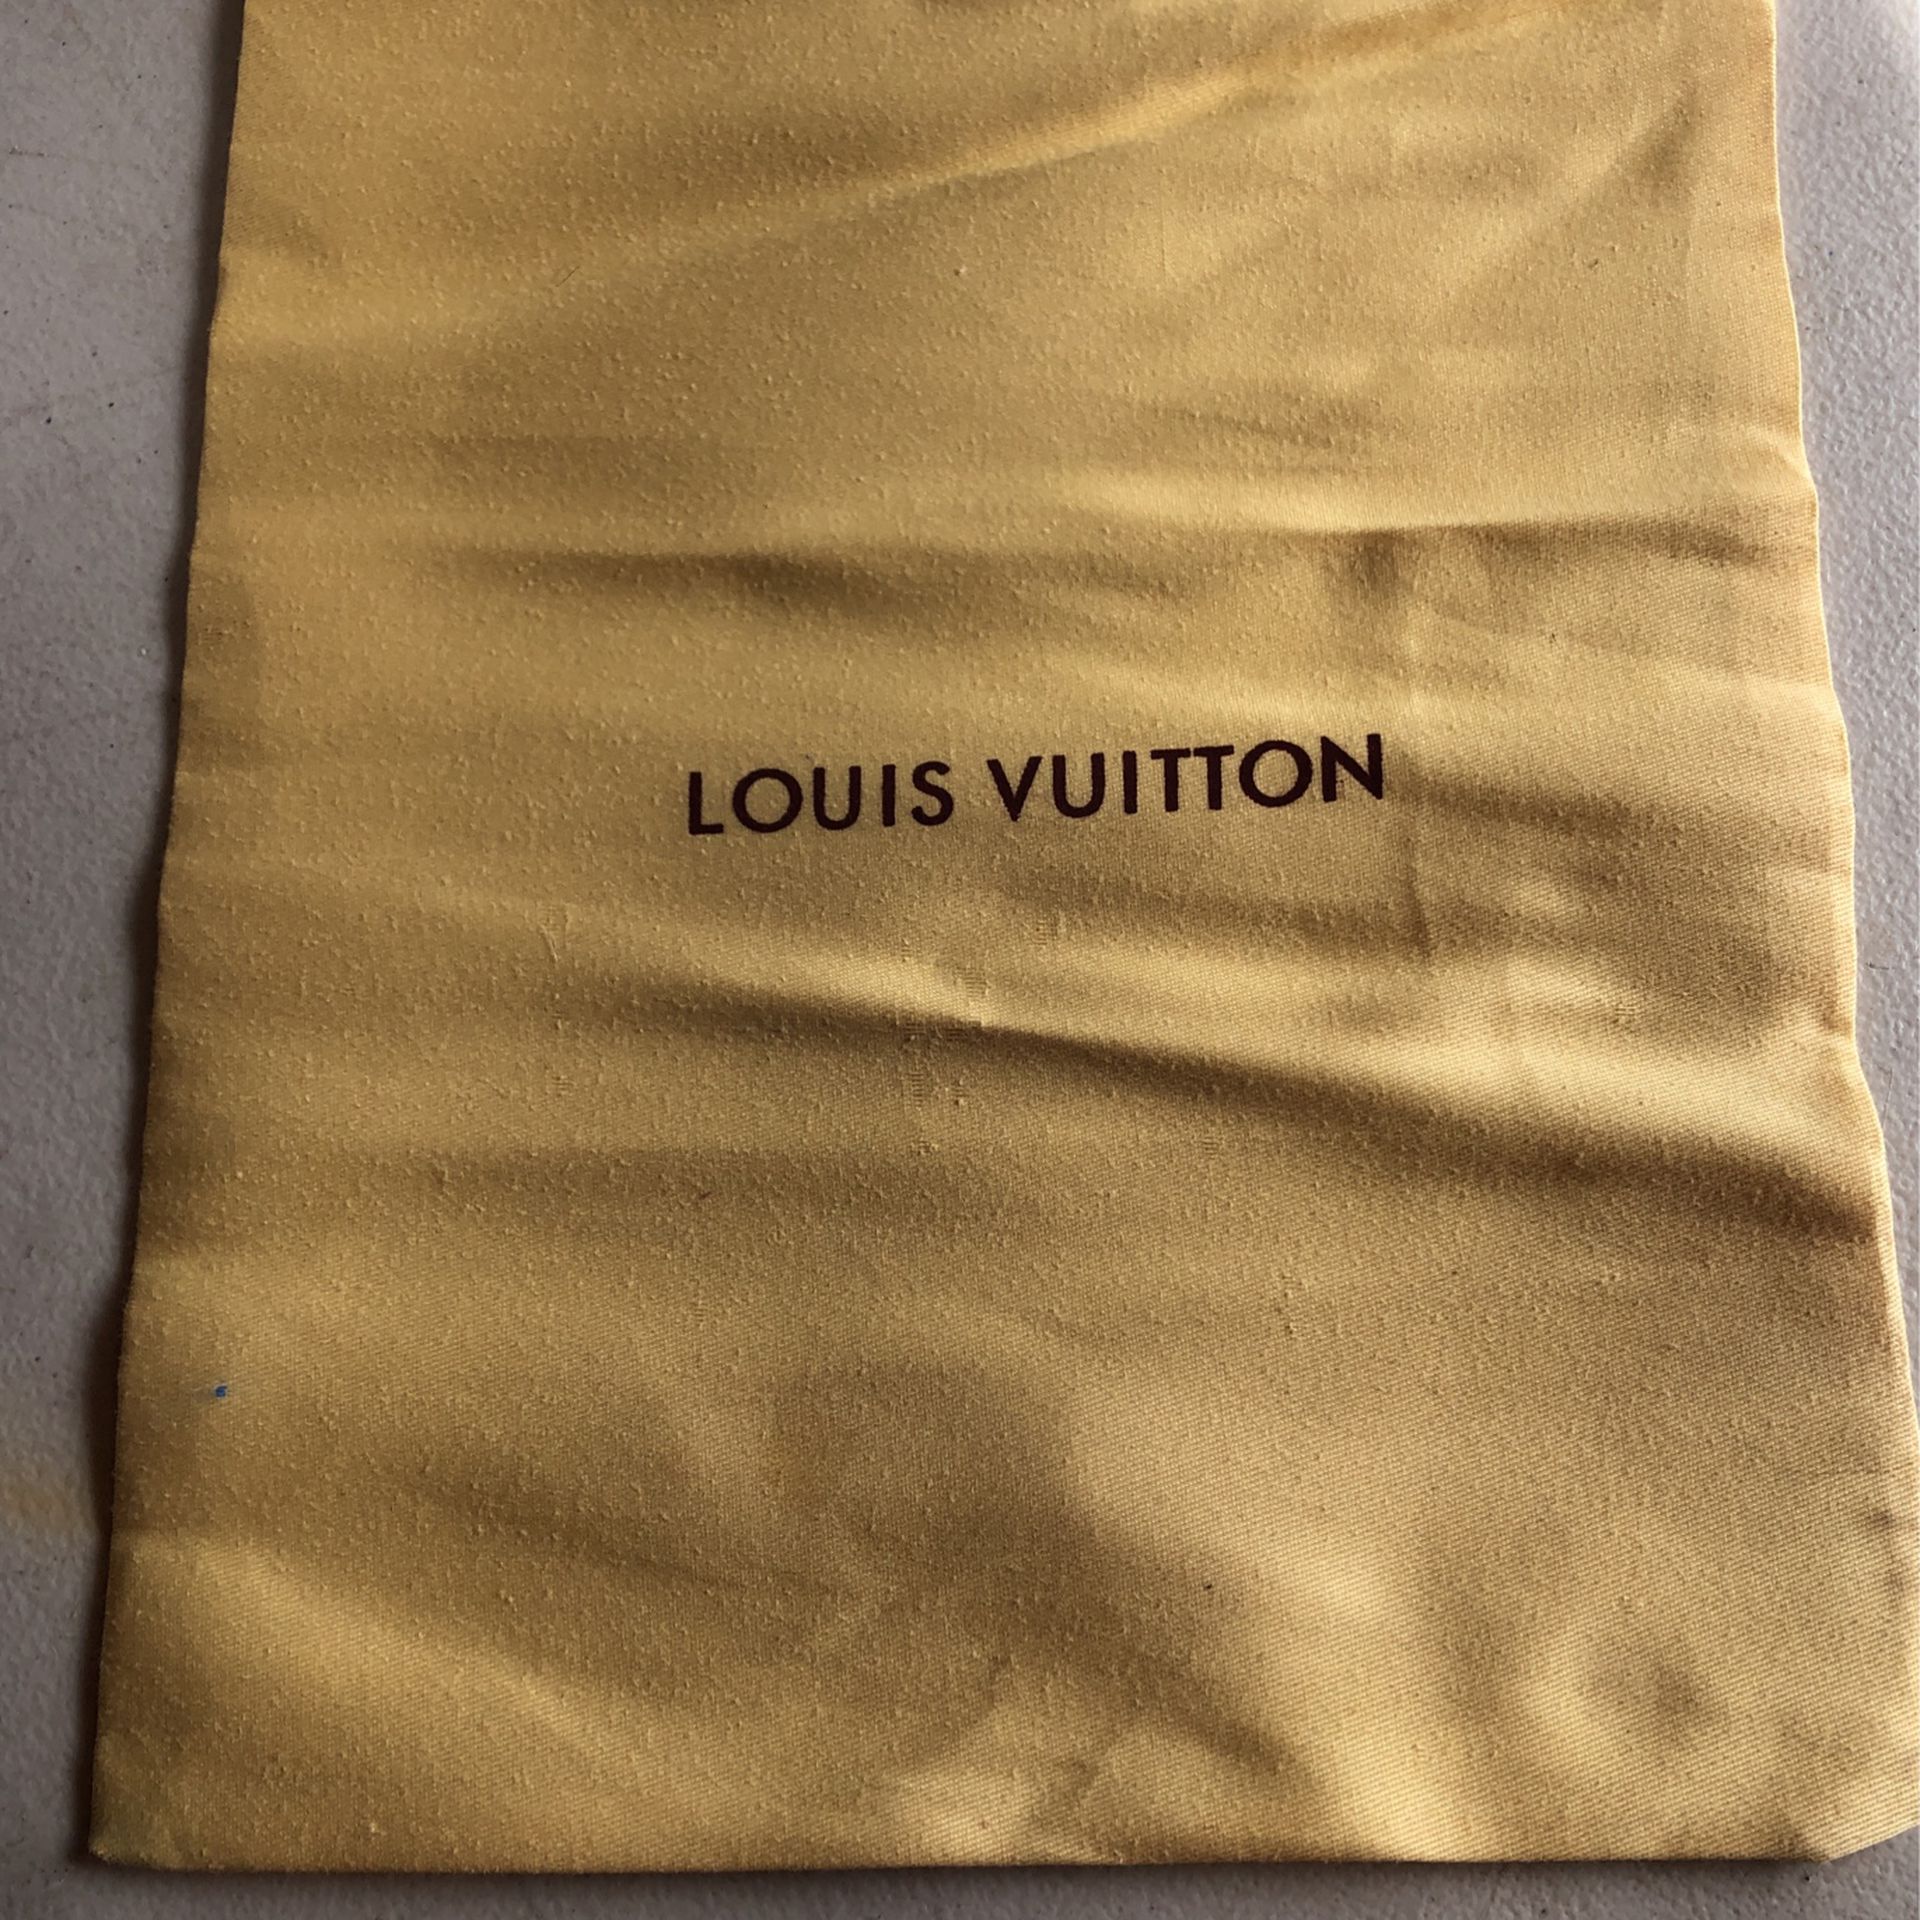 Chanel, Vuitton Boxes And Bag (3)pcs